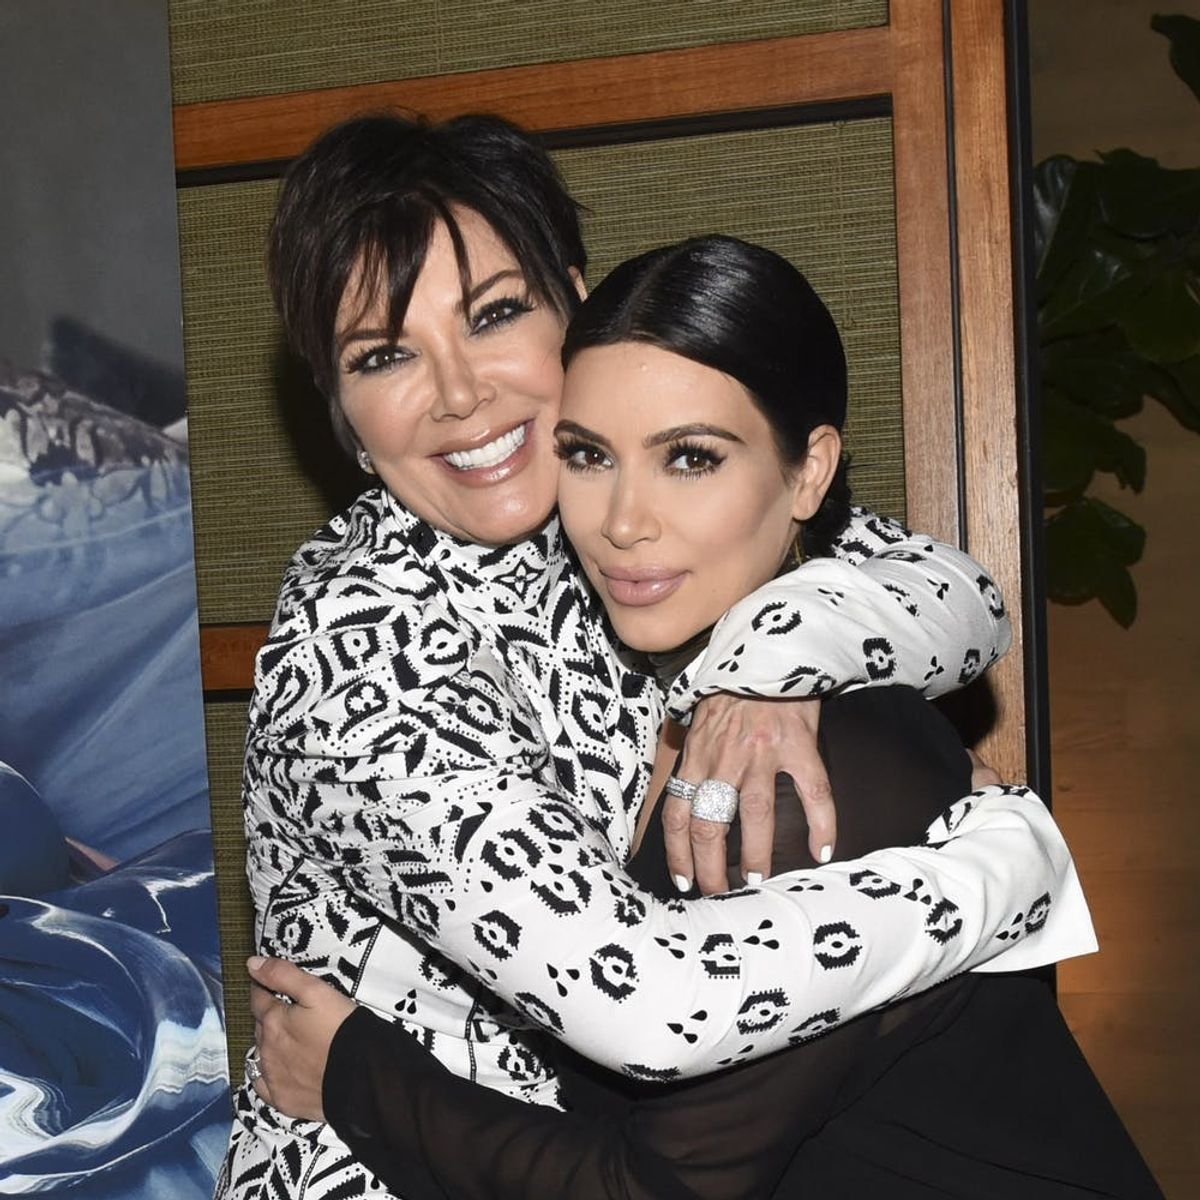 Kris Jenner Says Kim Kardashian’s Paris Robbery “Changed the Way We Live”